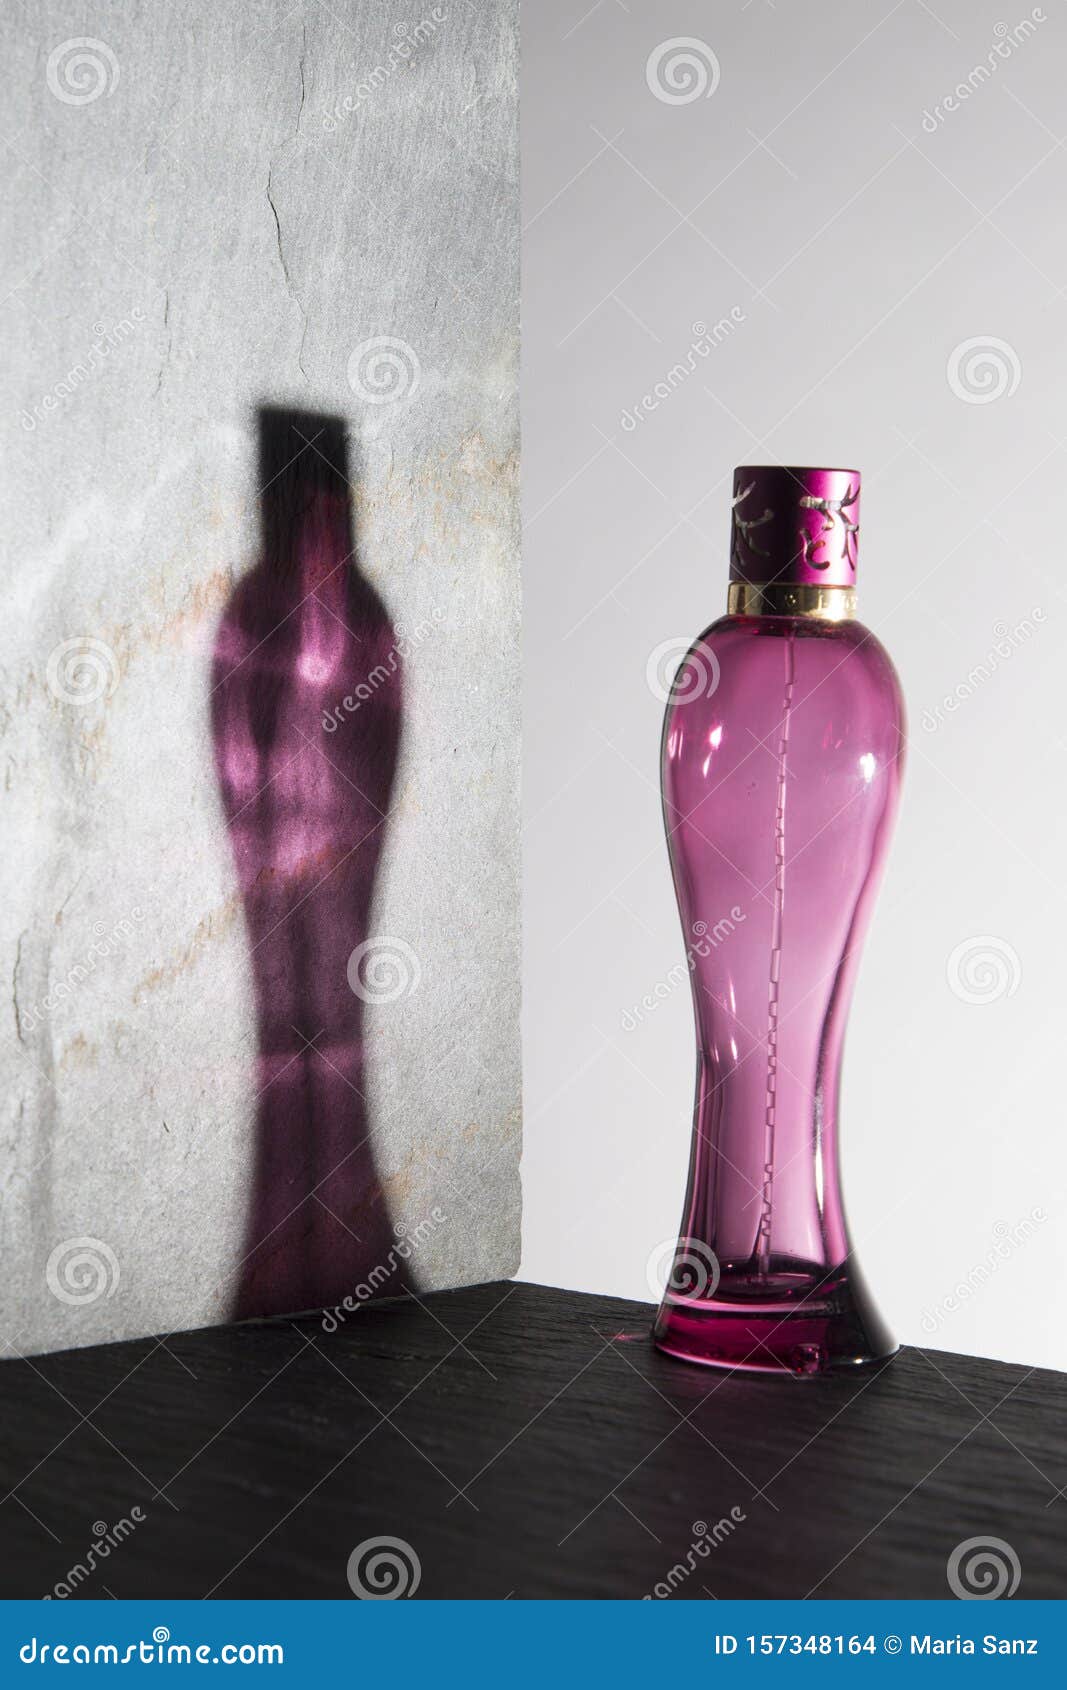 pink perfume bottle on white background